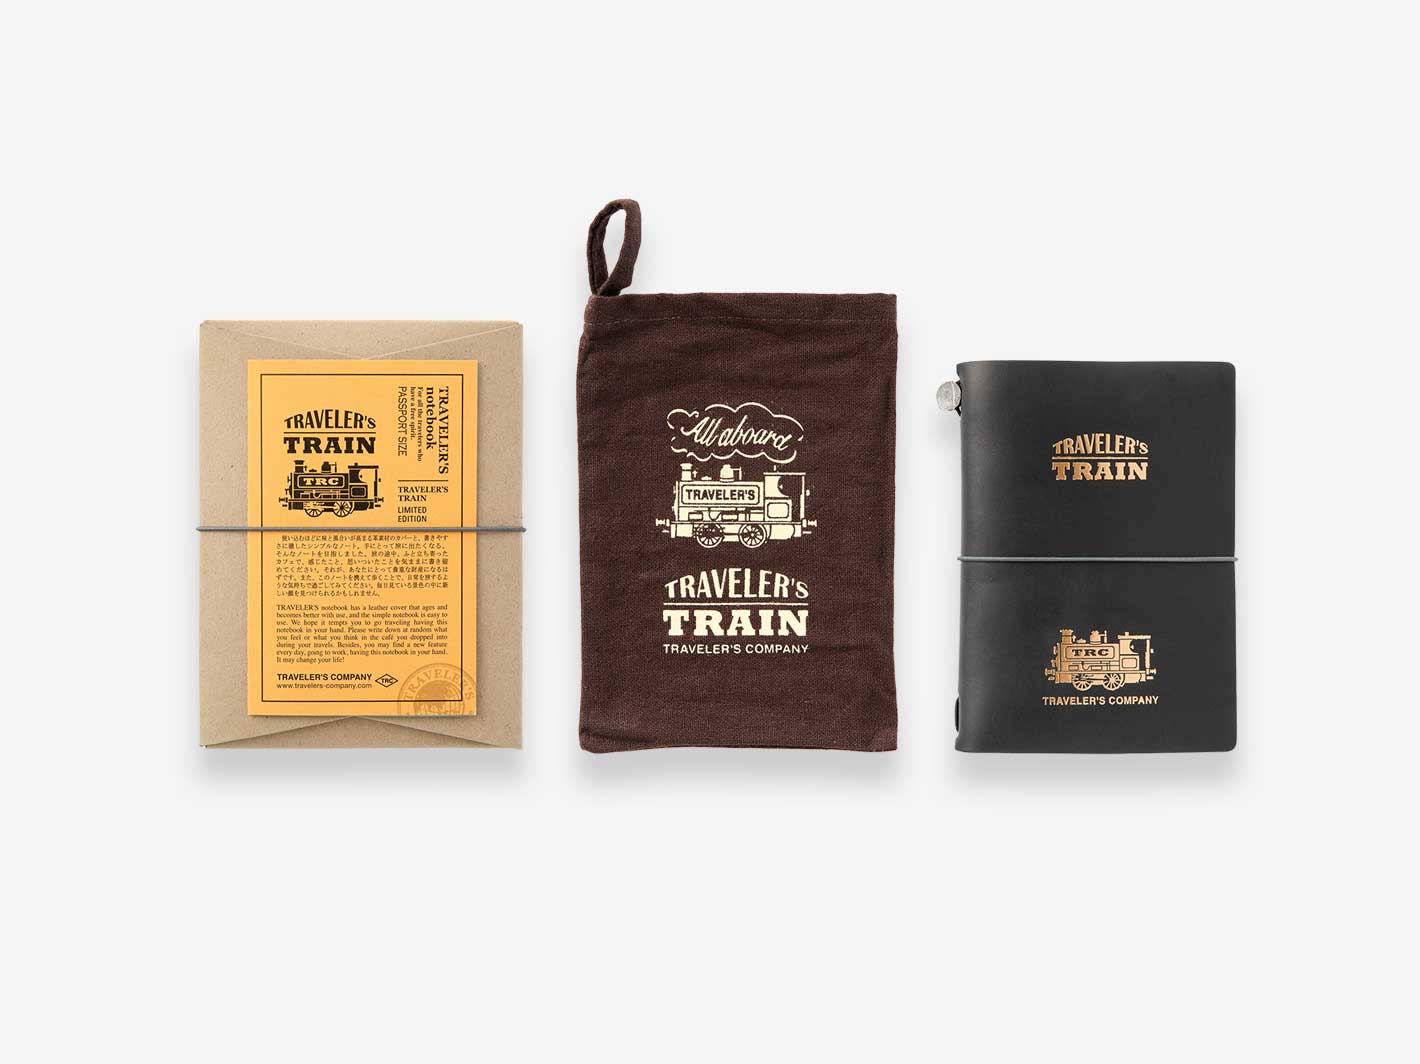 TRAVELER'S TRAIN Limited Edition Set